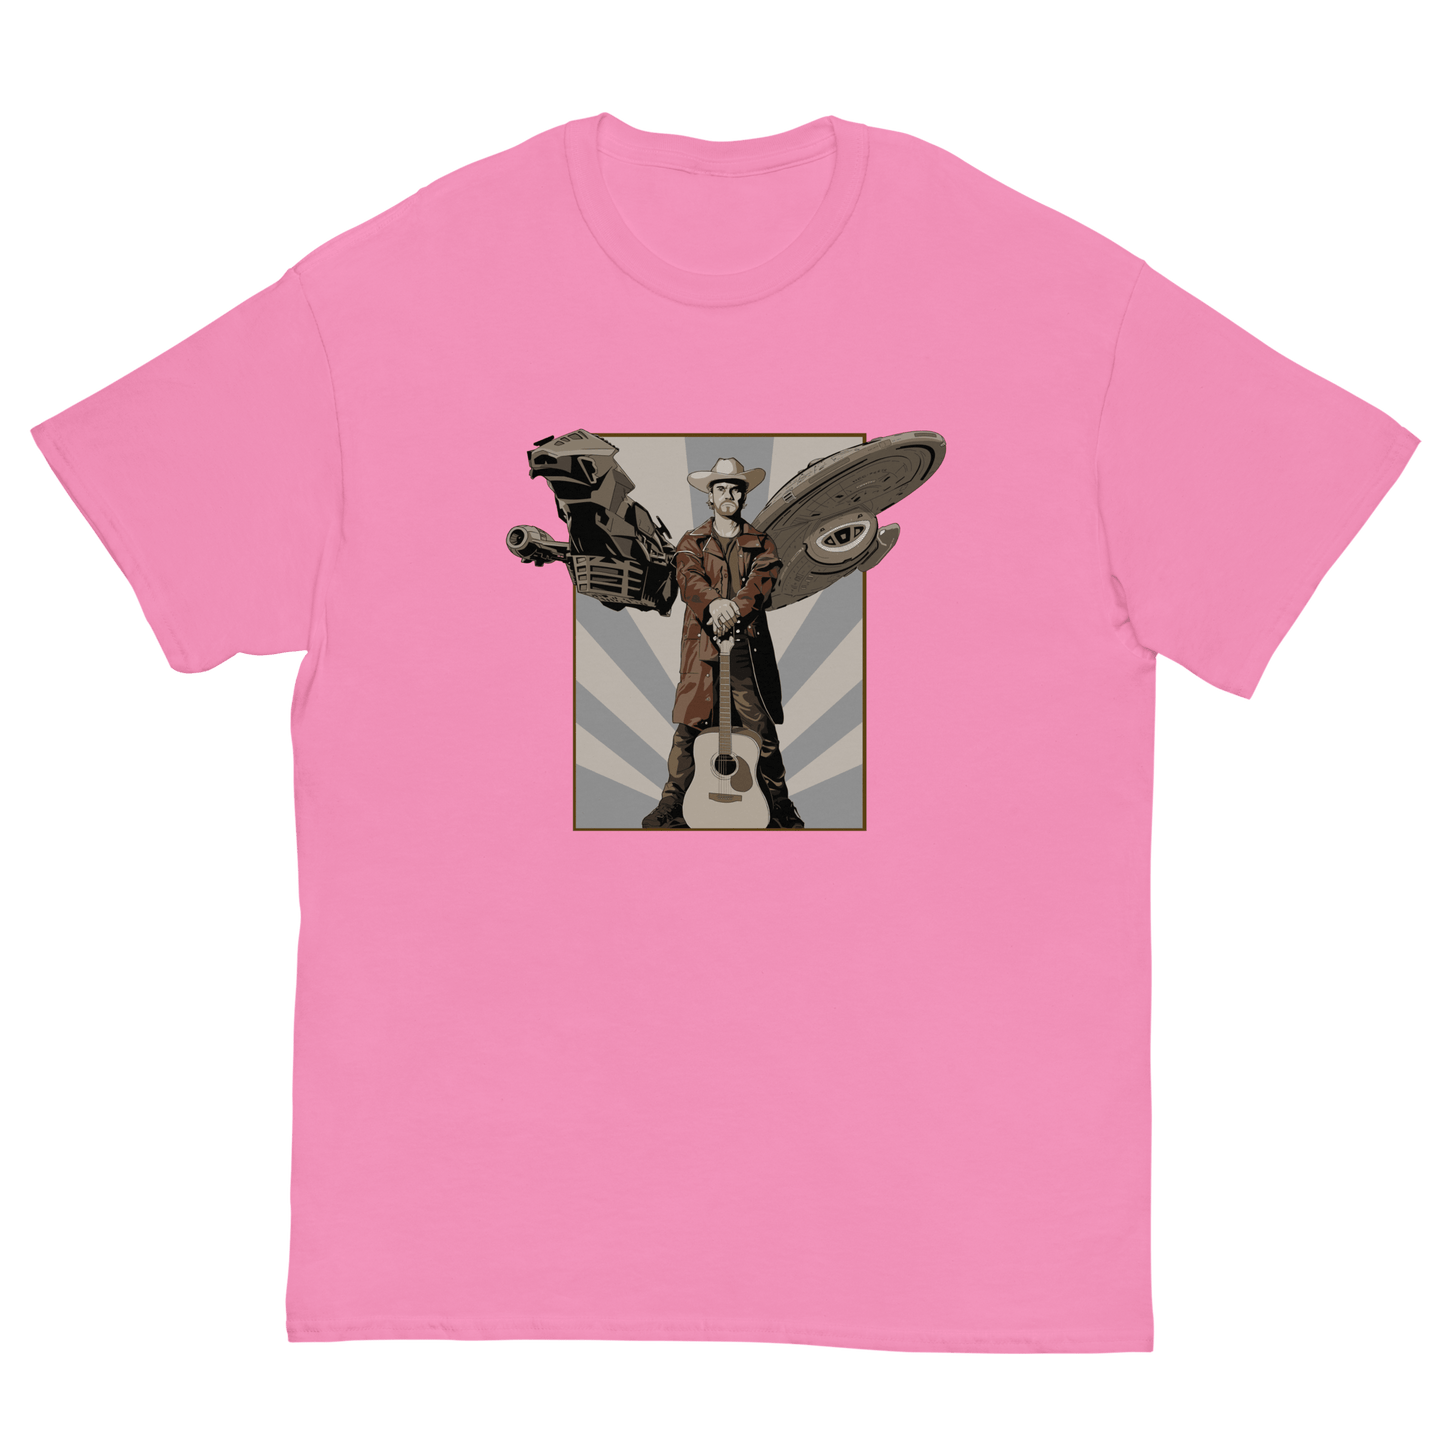 The Love Child Shirt